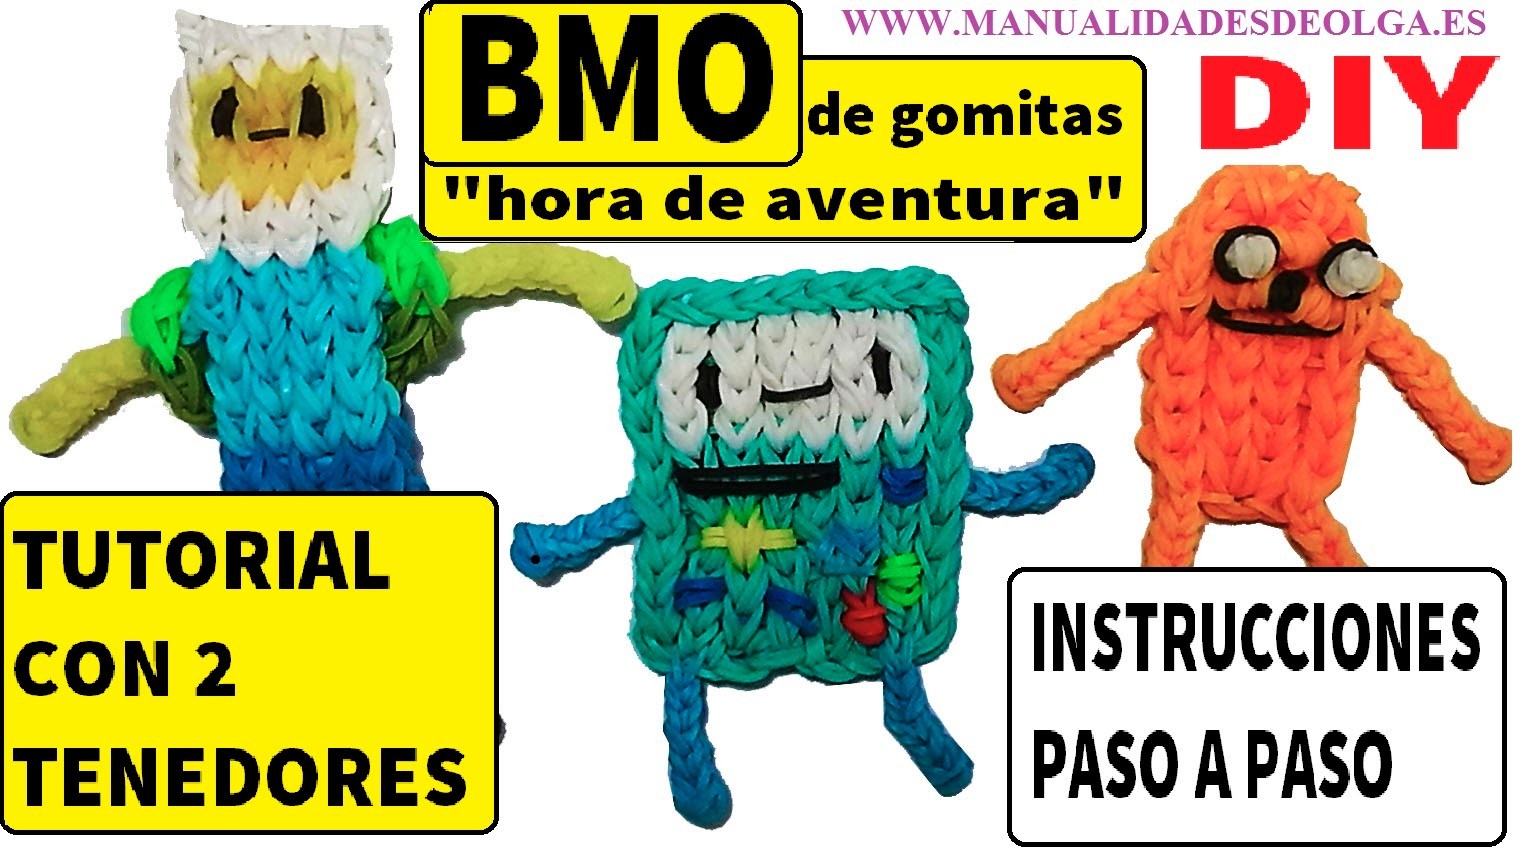 COMO HACER A BMO DE HORA DE AVENTURAS DE GOMITAS (LIGAS) CHARMS CON 2 TENEDORES